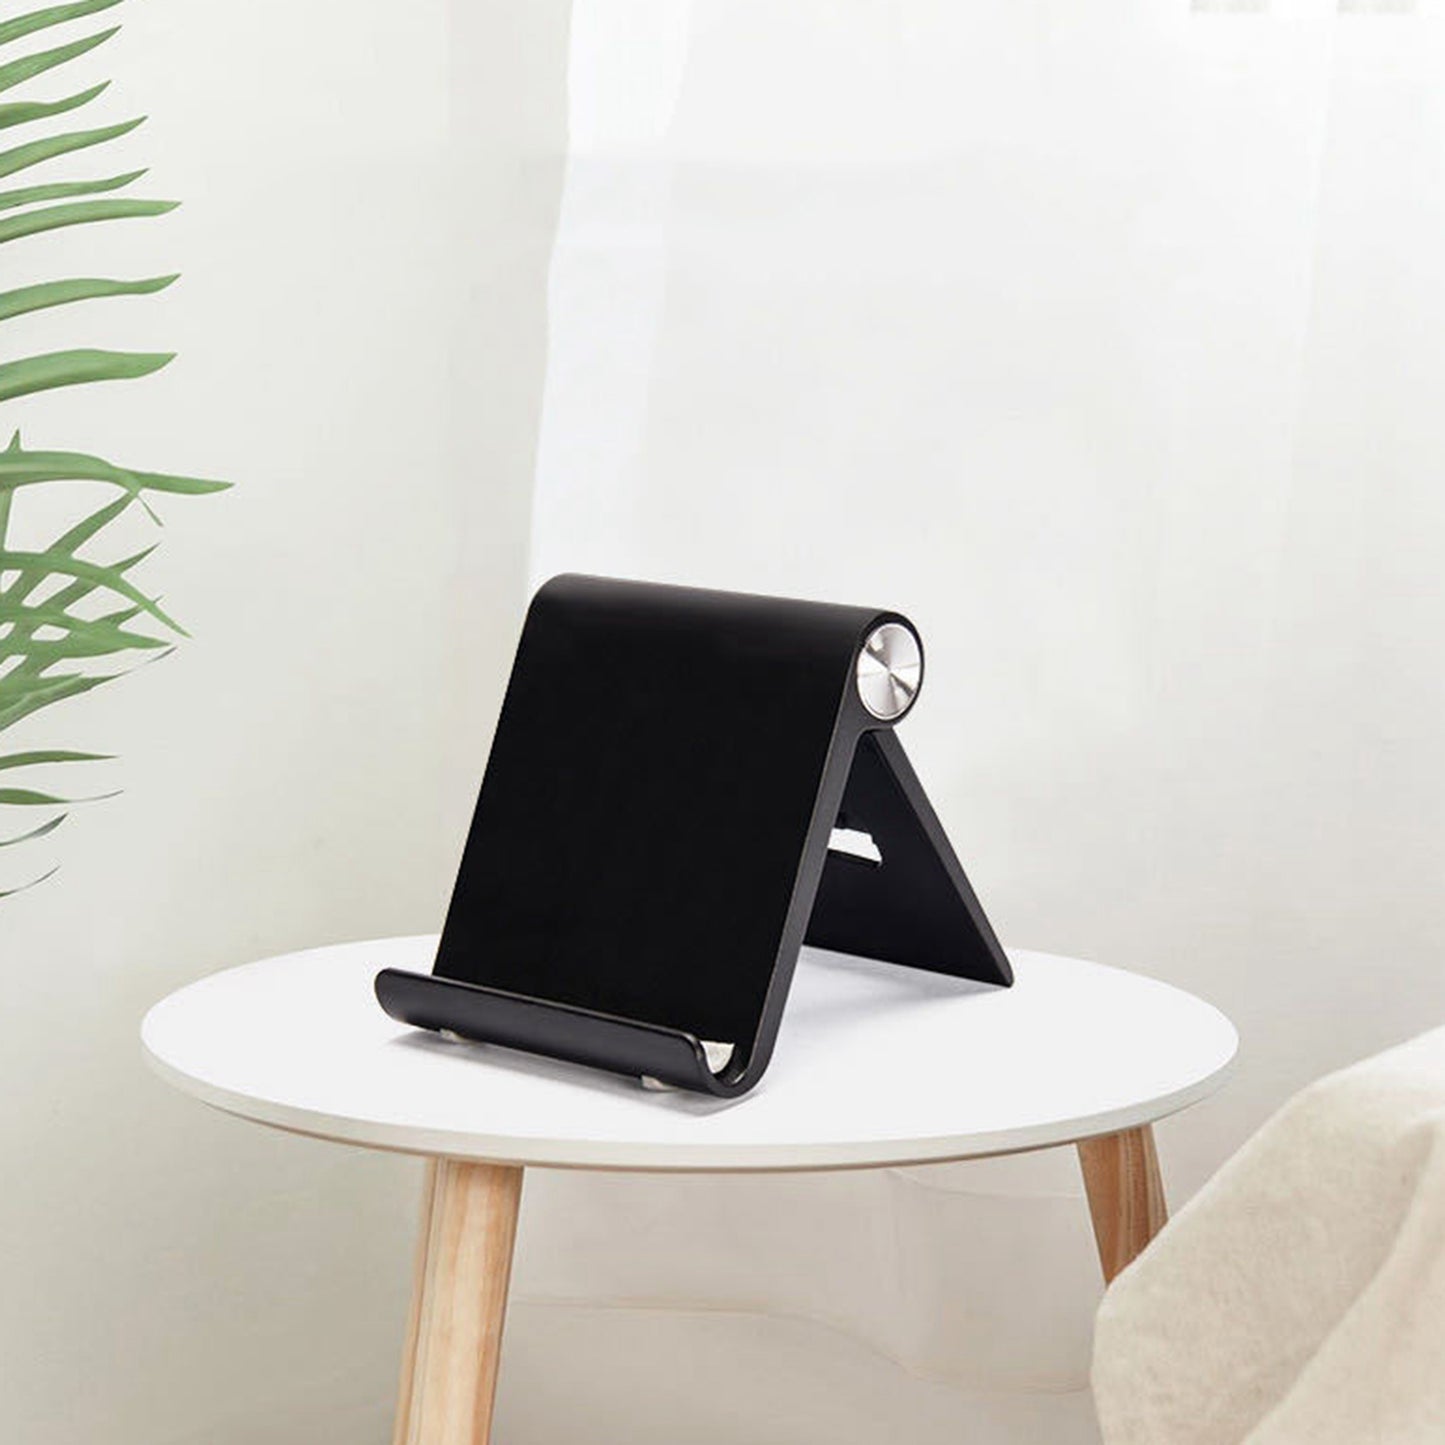 Minimalist iPad Stand